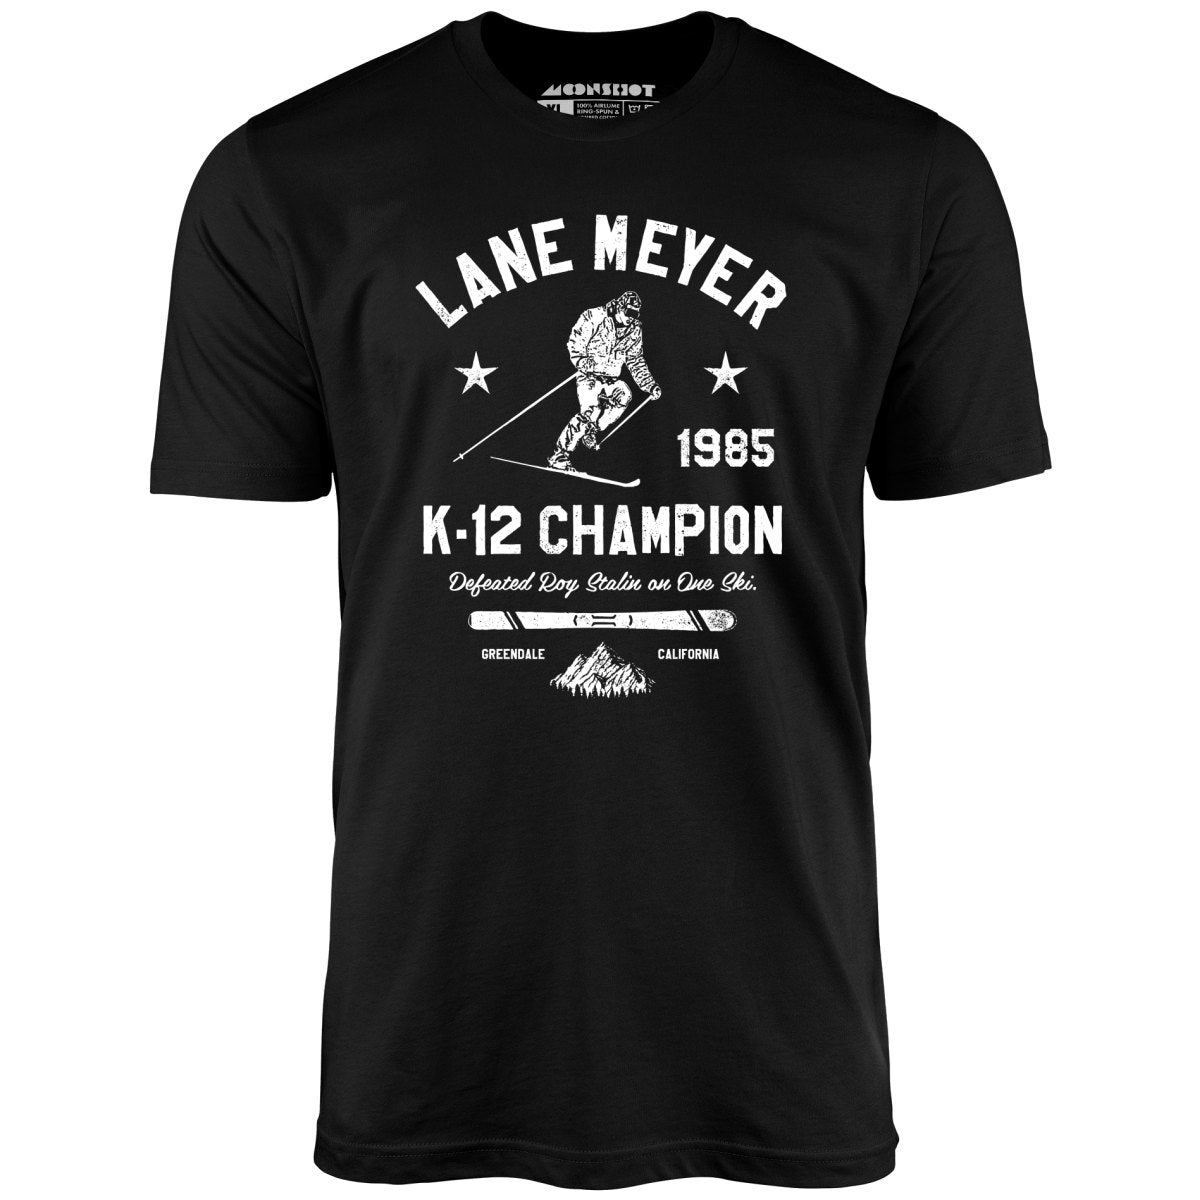 Lane Meyer K-12 Champion - Unisex T-Shirt